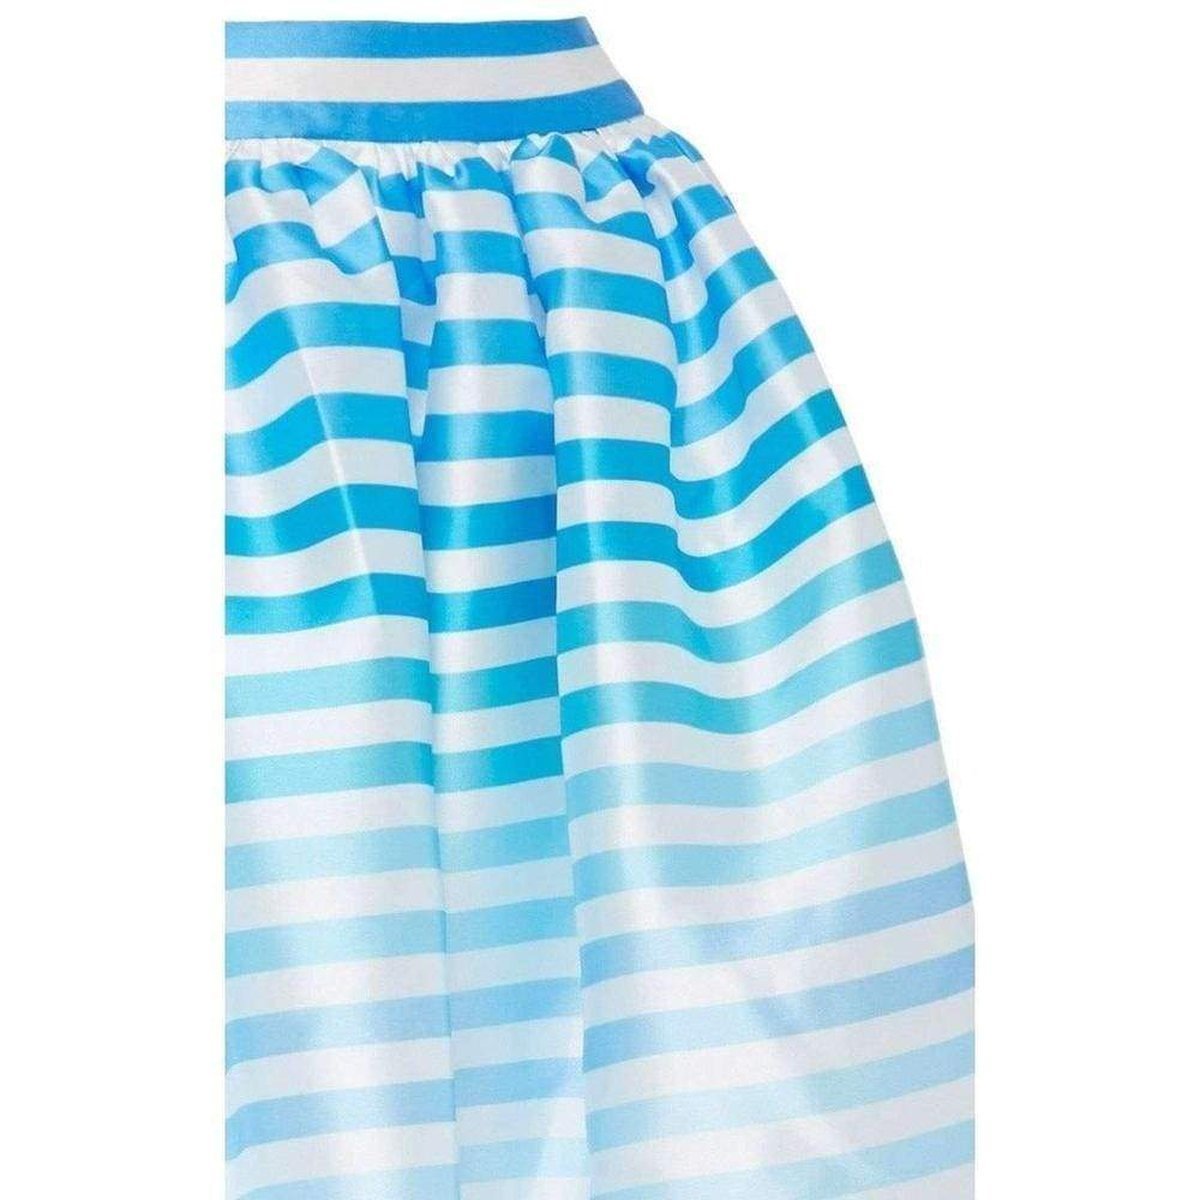 Pleated Print A-Line Skirt